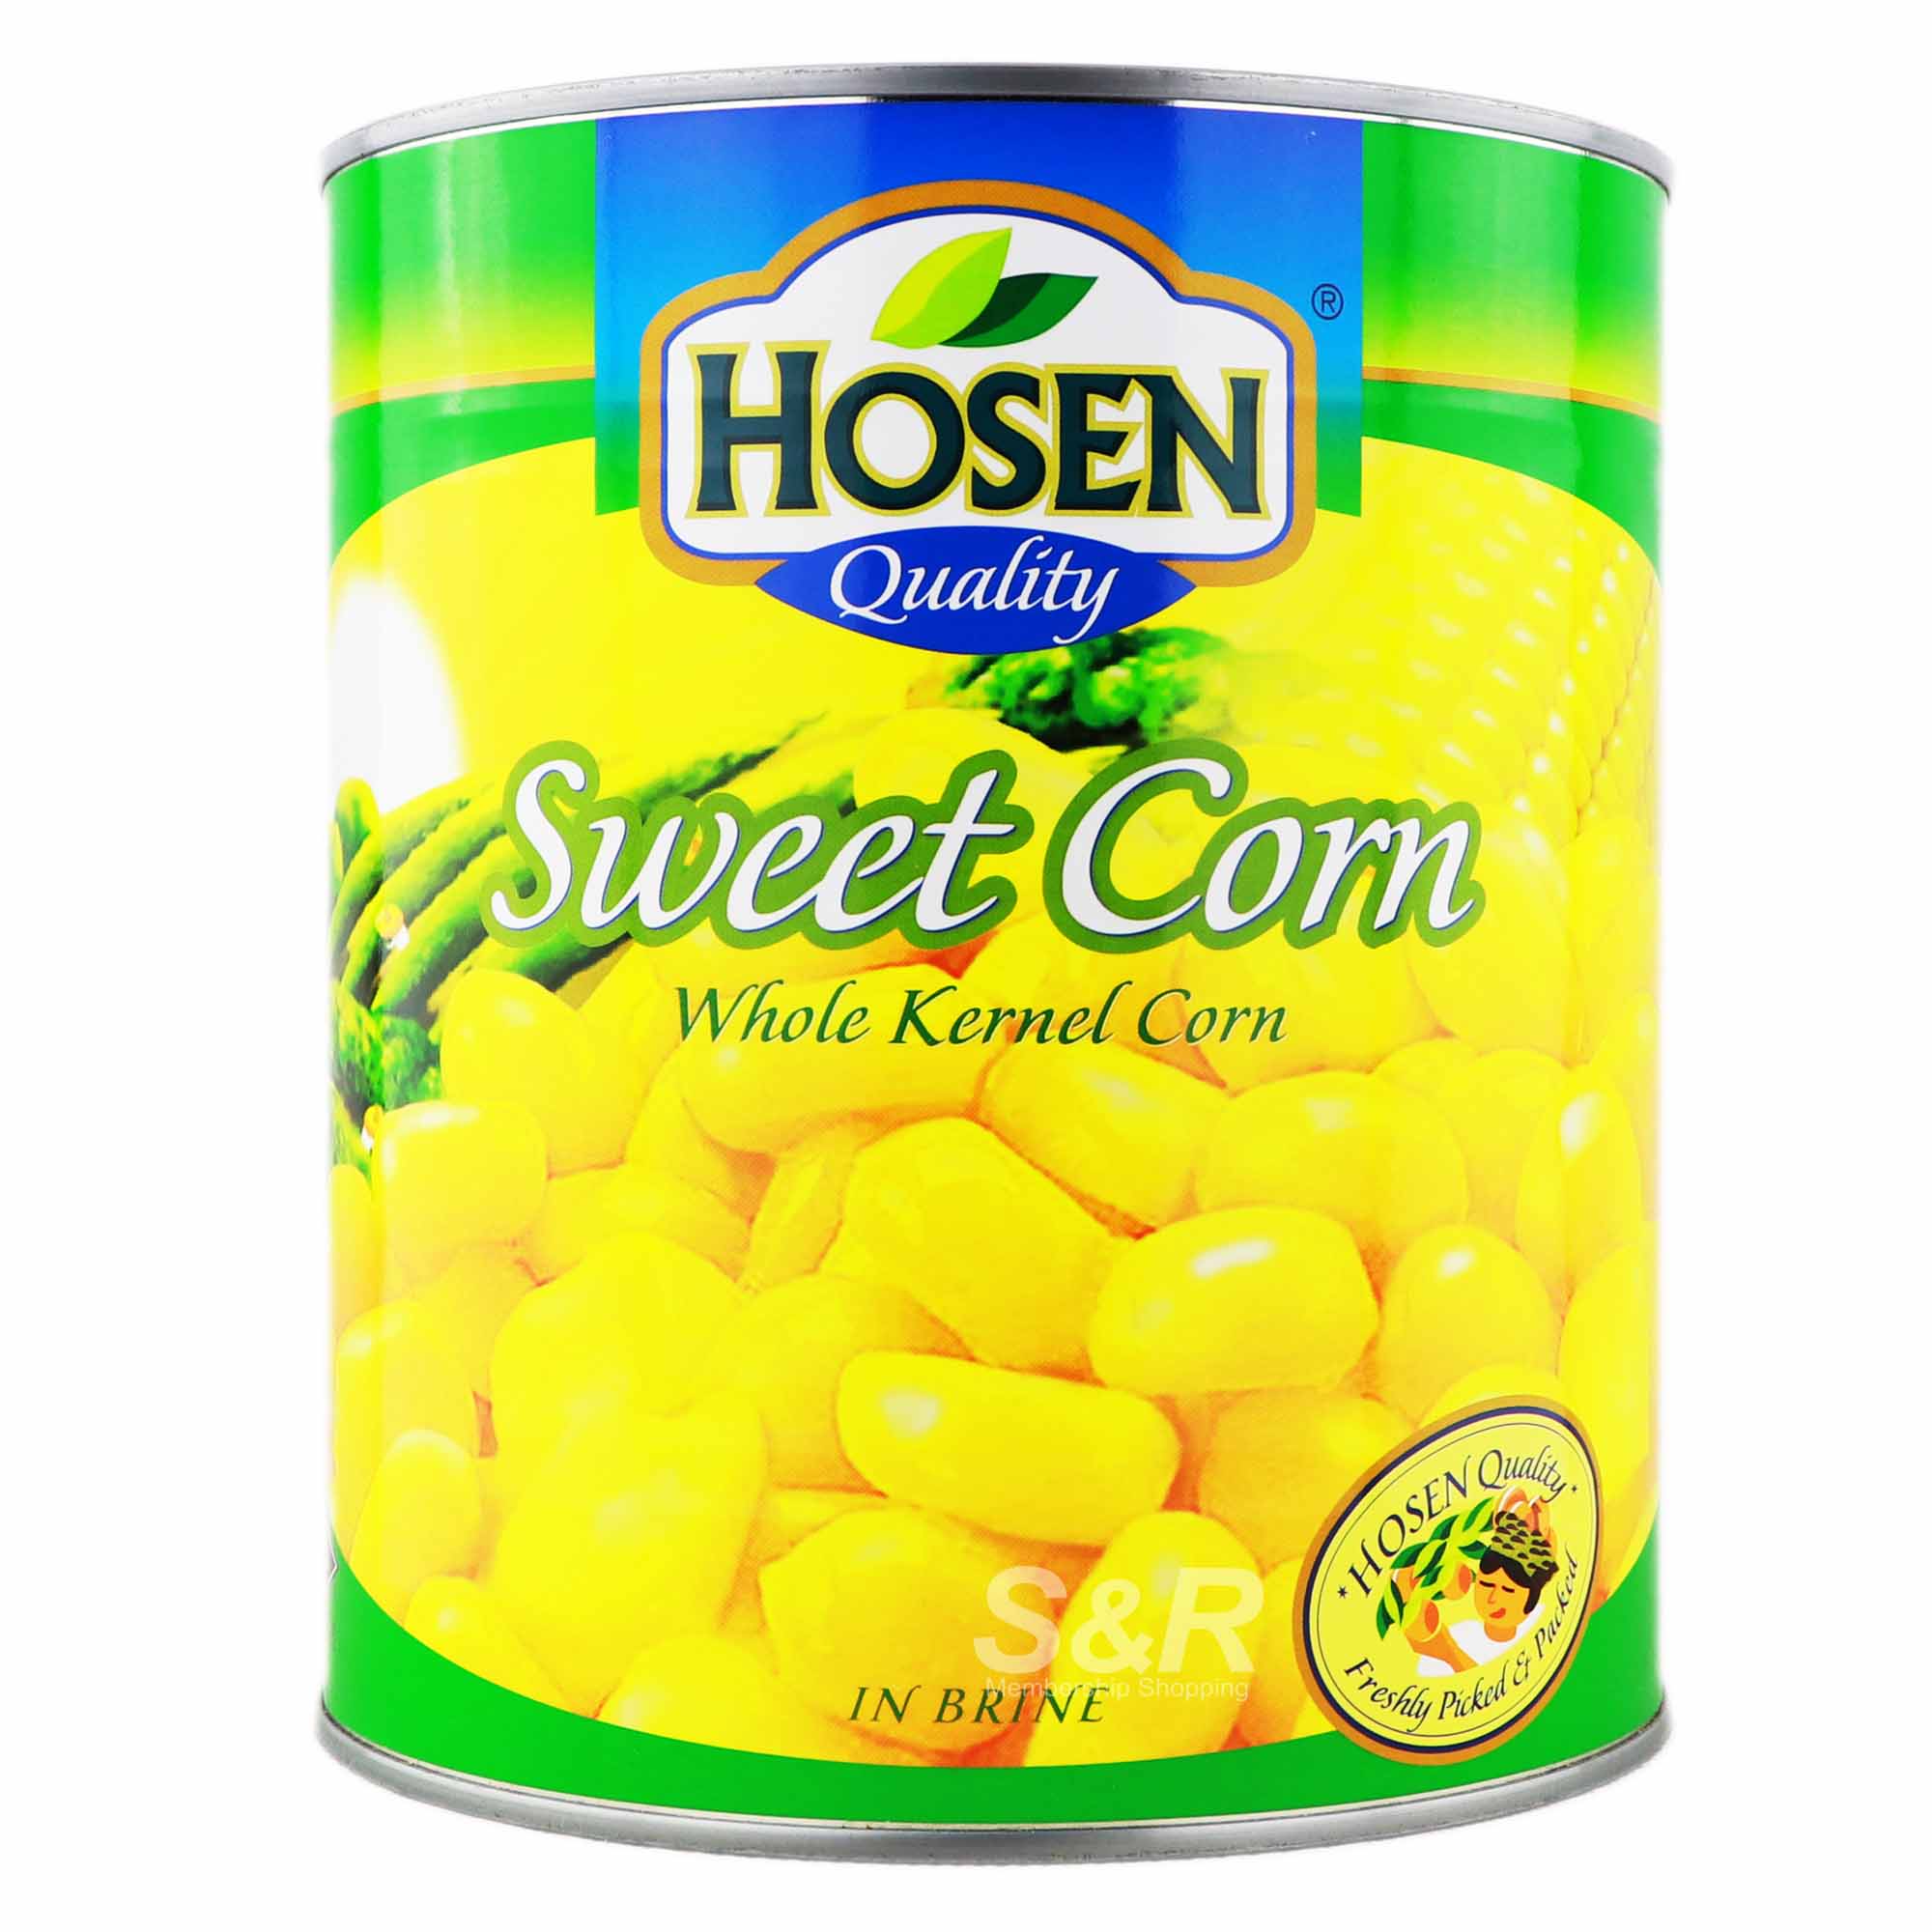 Hosen Quality Sweet Corn Whole Kernel Corn in Brine 2.95kg